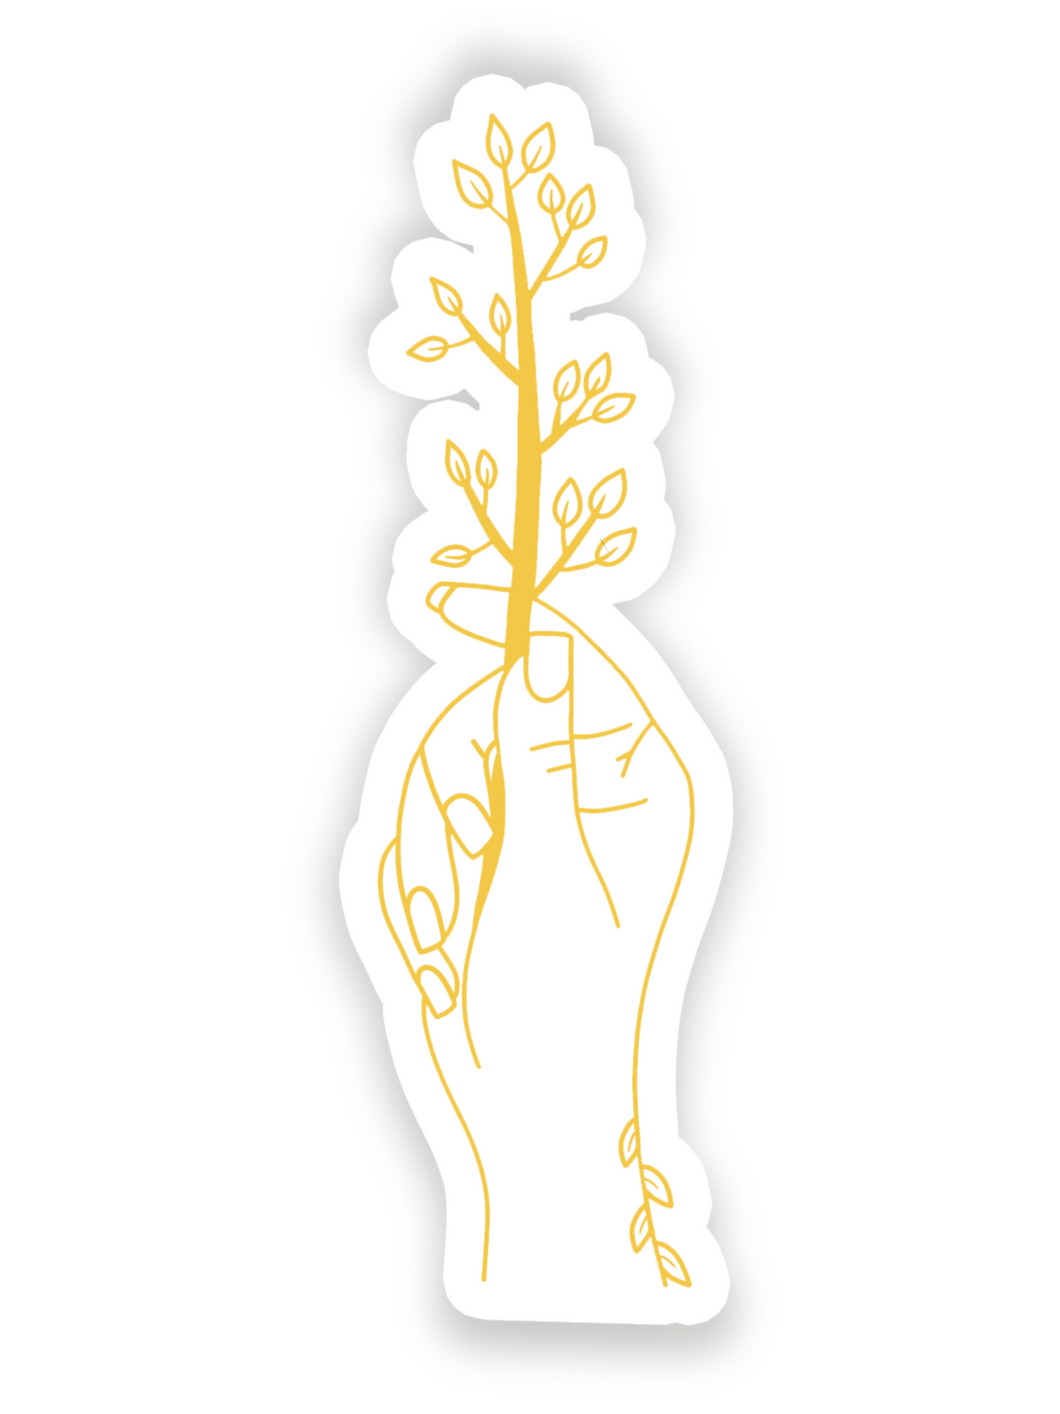 Growth - Hands of Gold Goudfolie Sticker 2.8x9.2cm